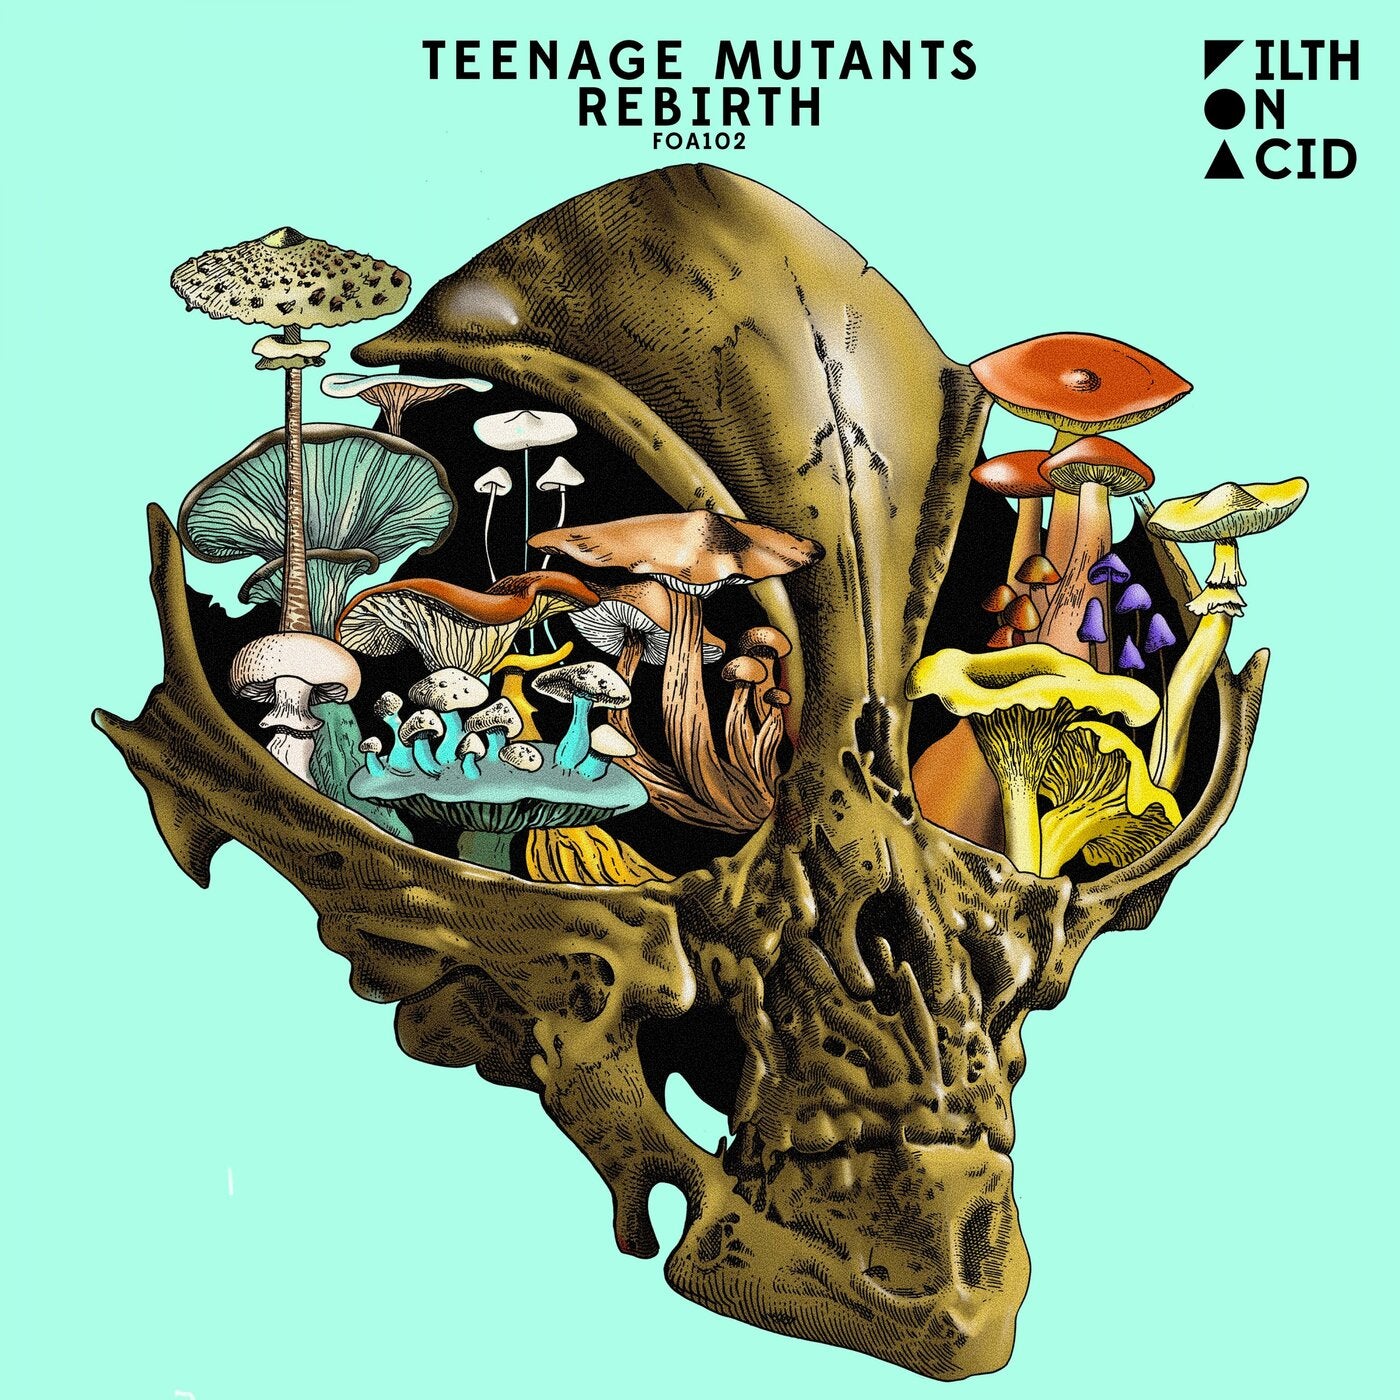 image cover: Teenage Mutants, Heerhorst - Rebirth / FOA102